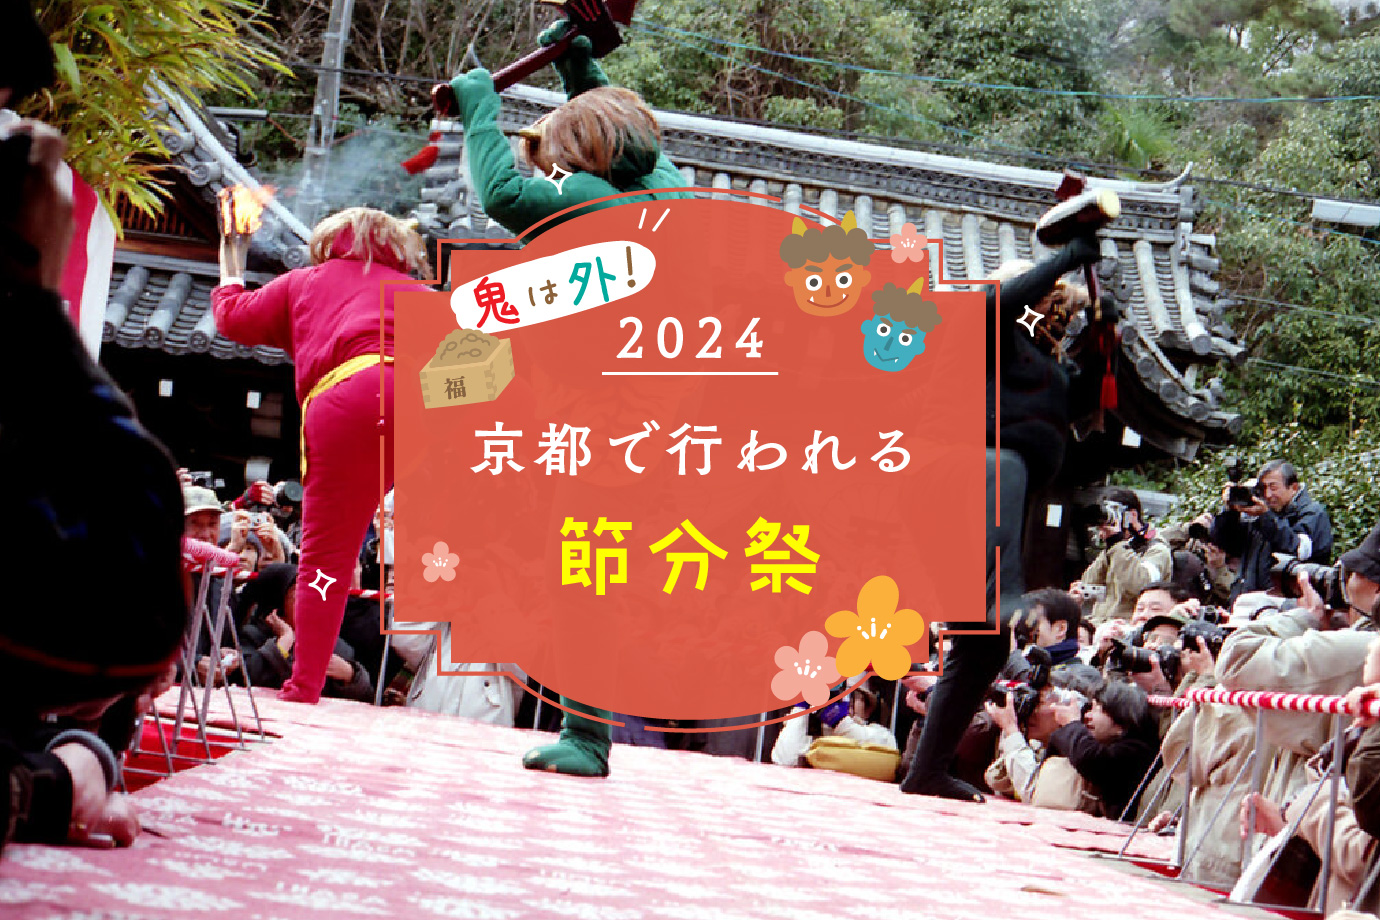 2024] Oni wa soto! Three Setsubun Festivals in Kyoto that Bring Spring -  Leaf KYOTO